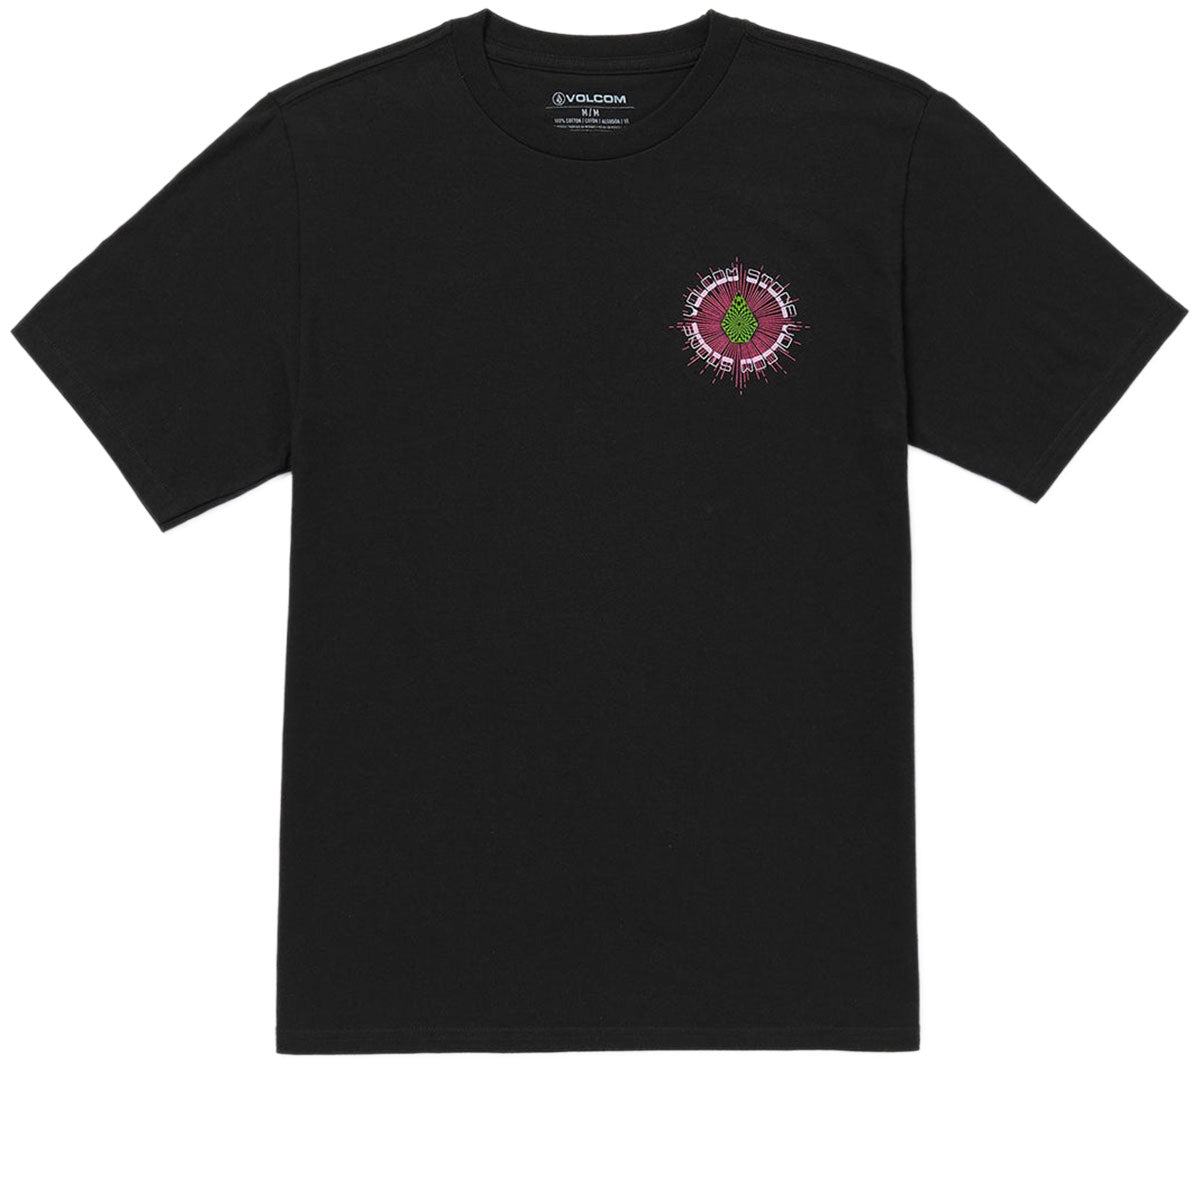 Volcom 1800 Stone T-Shirt - Black image 2